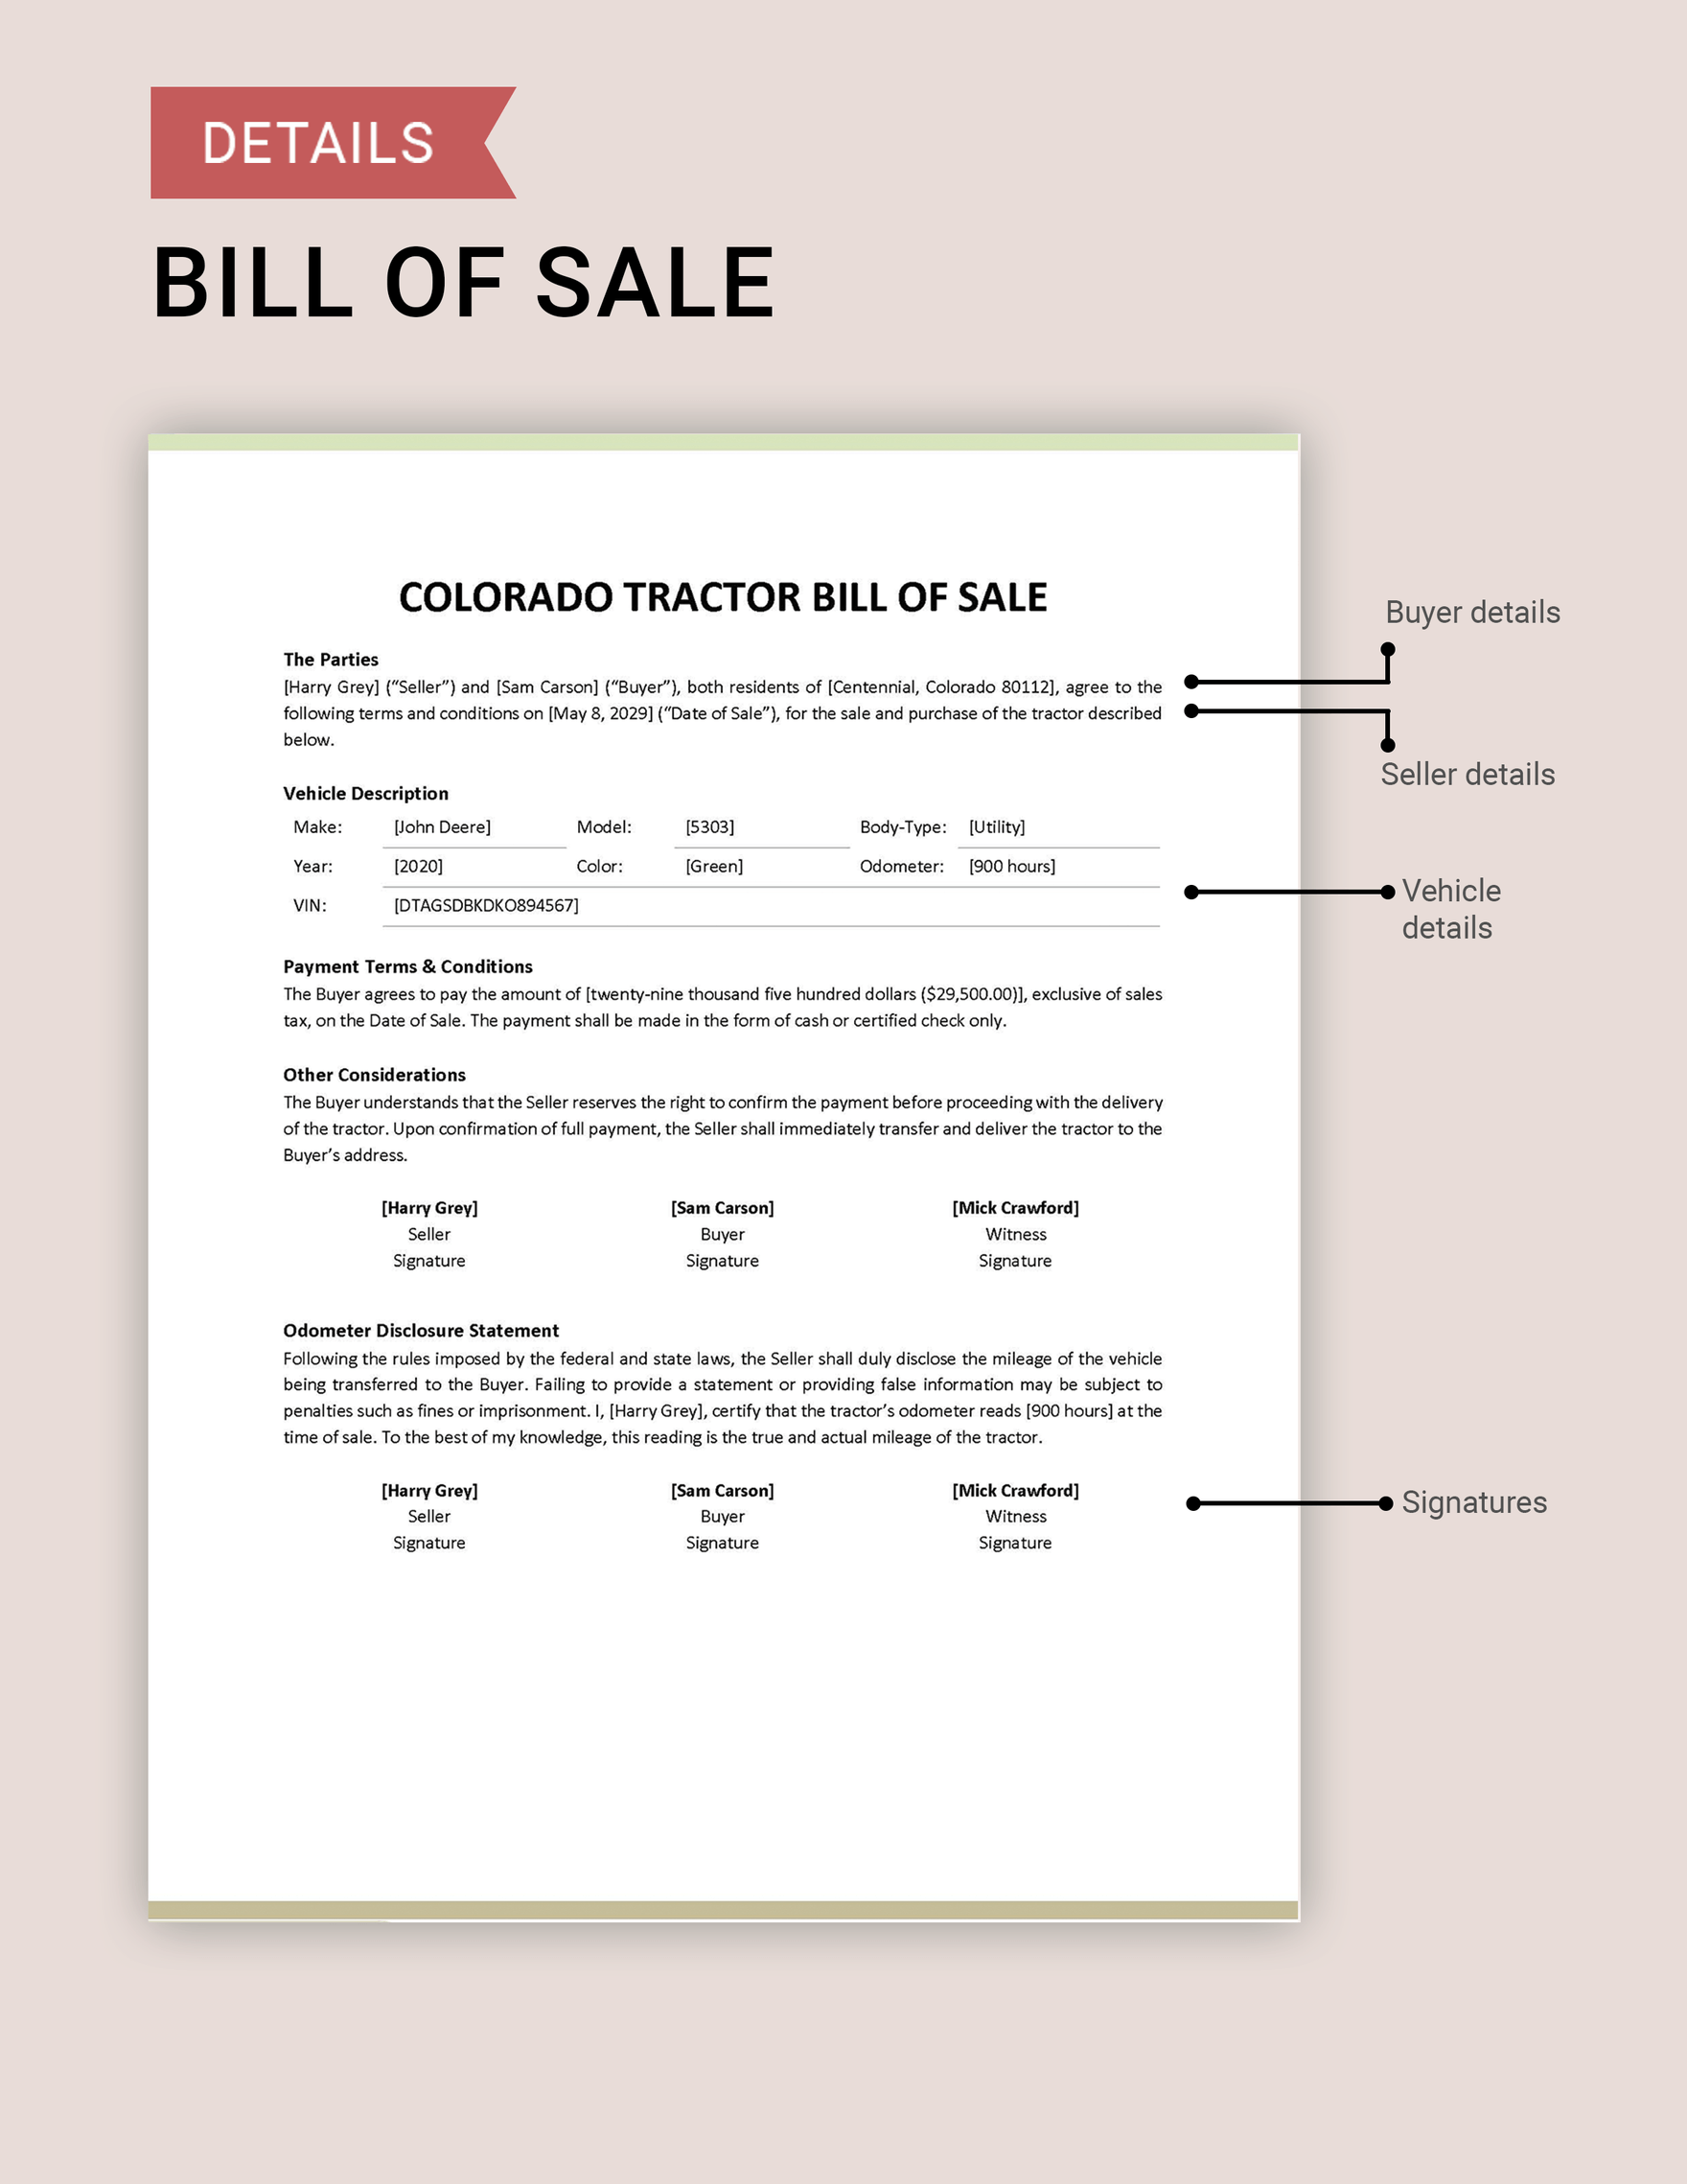 Colorado Tractor Bill of Sale Template